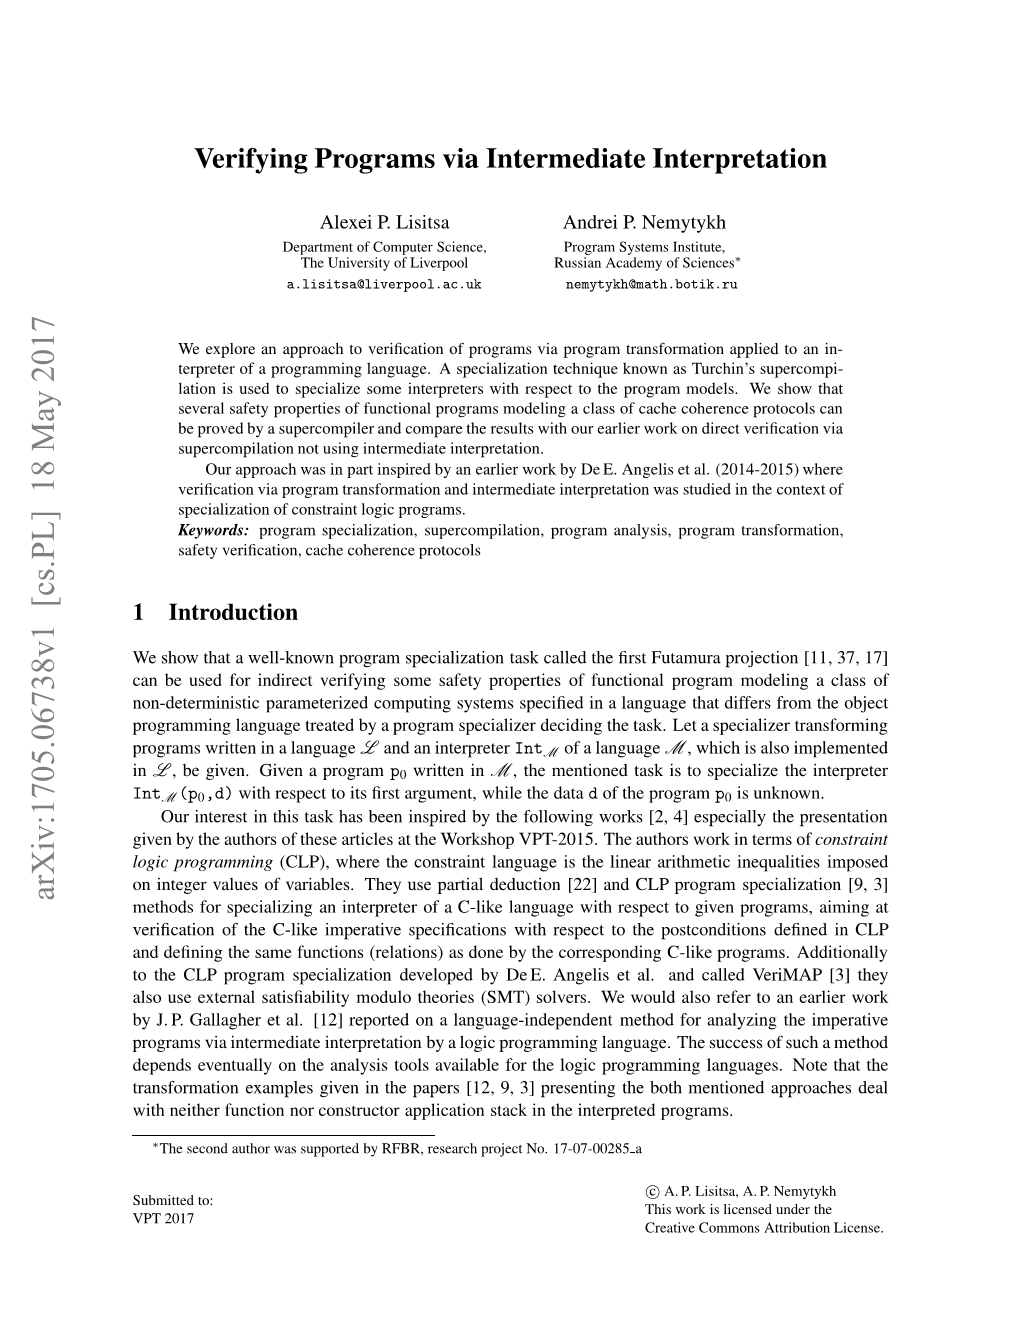 Verifying Programs Via Intermediate Interpretation